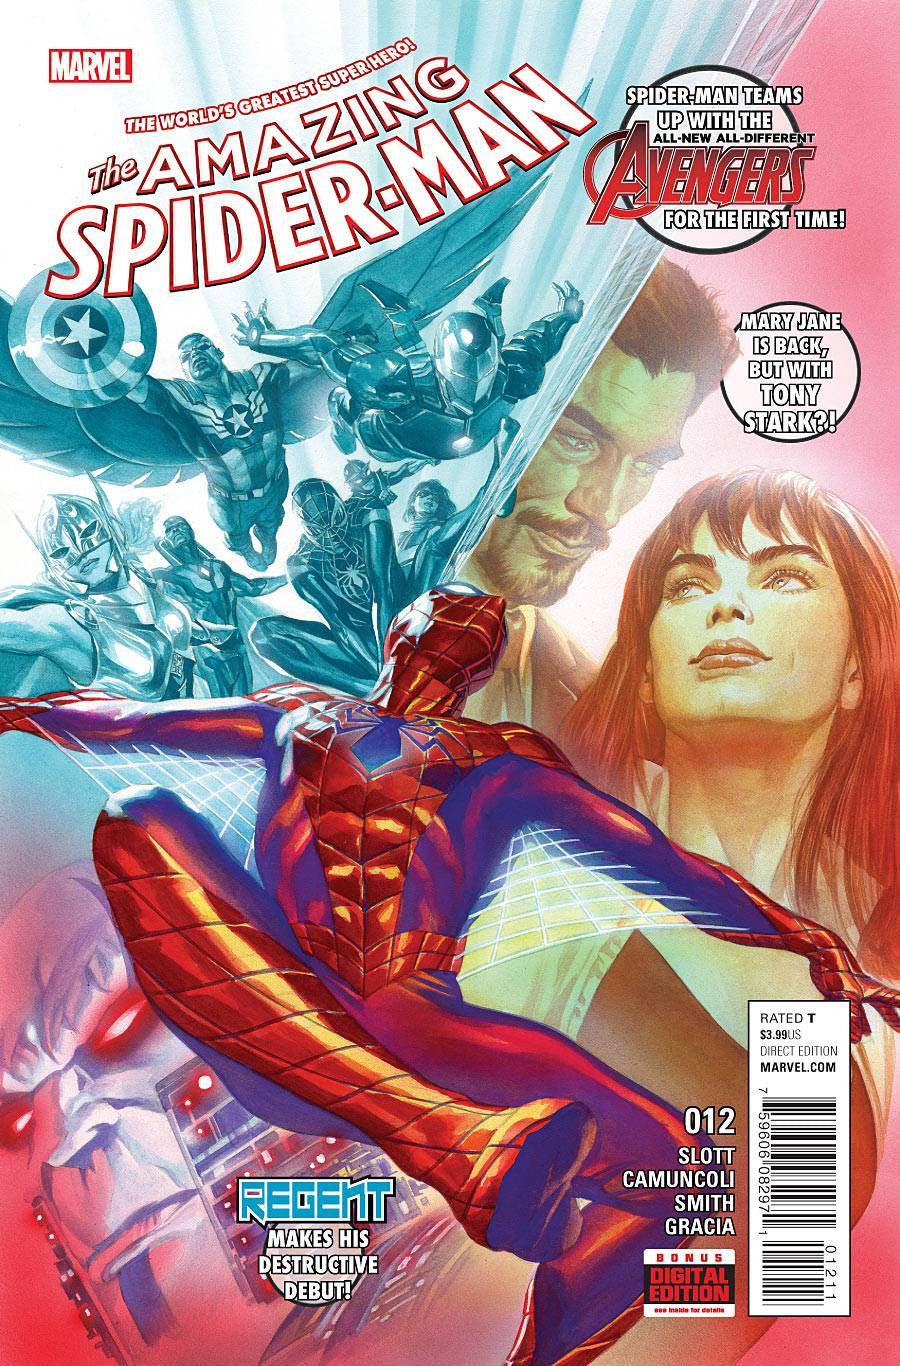 AMAZING SPIDER-MAN #12 COVER